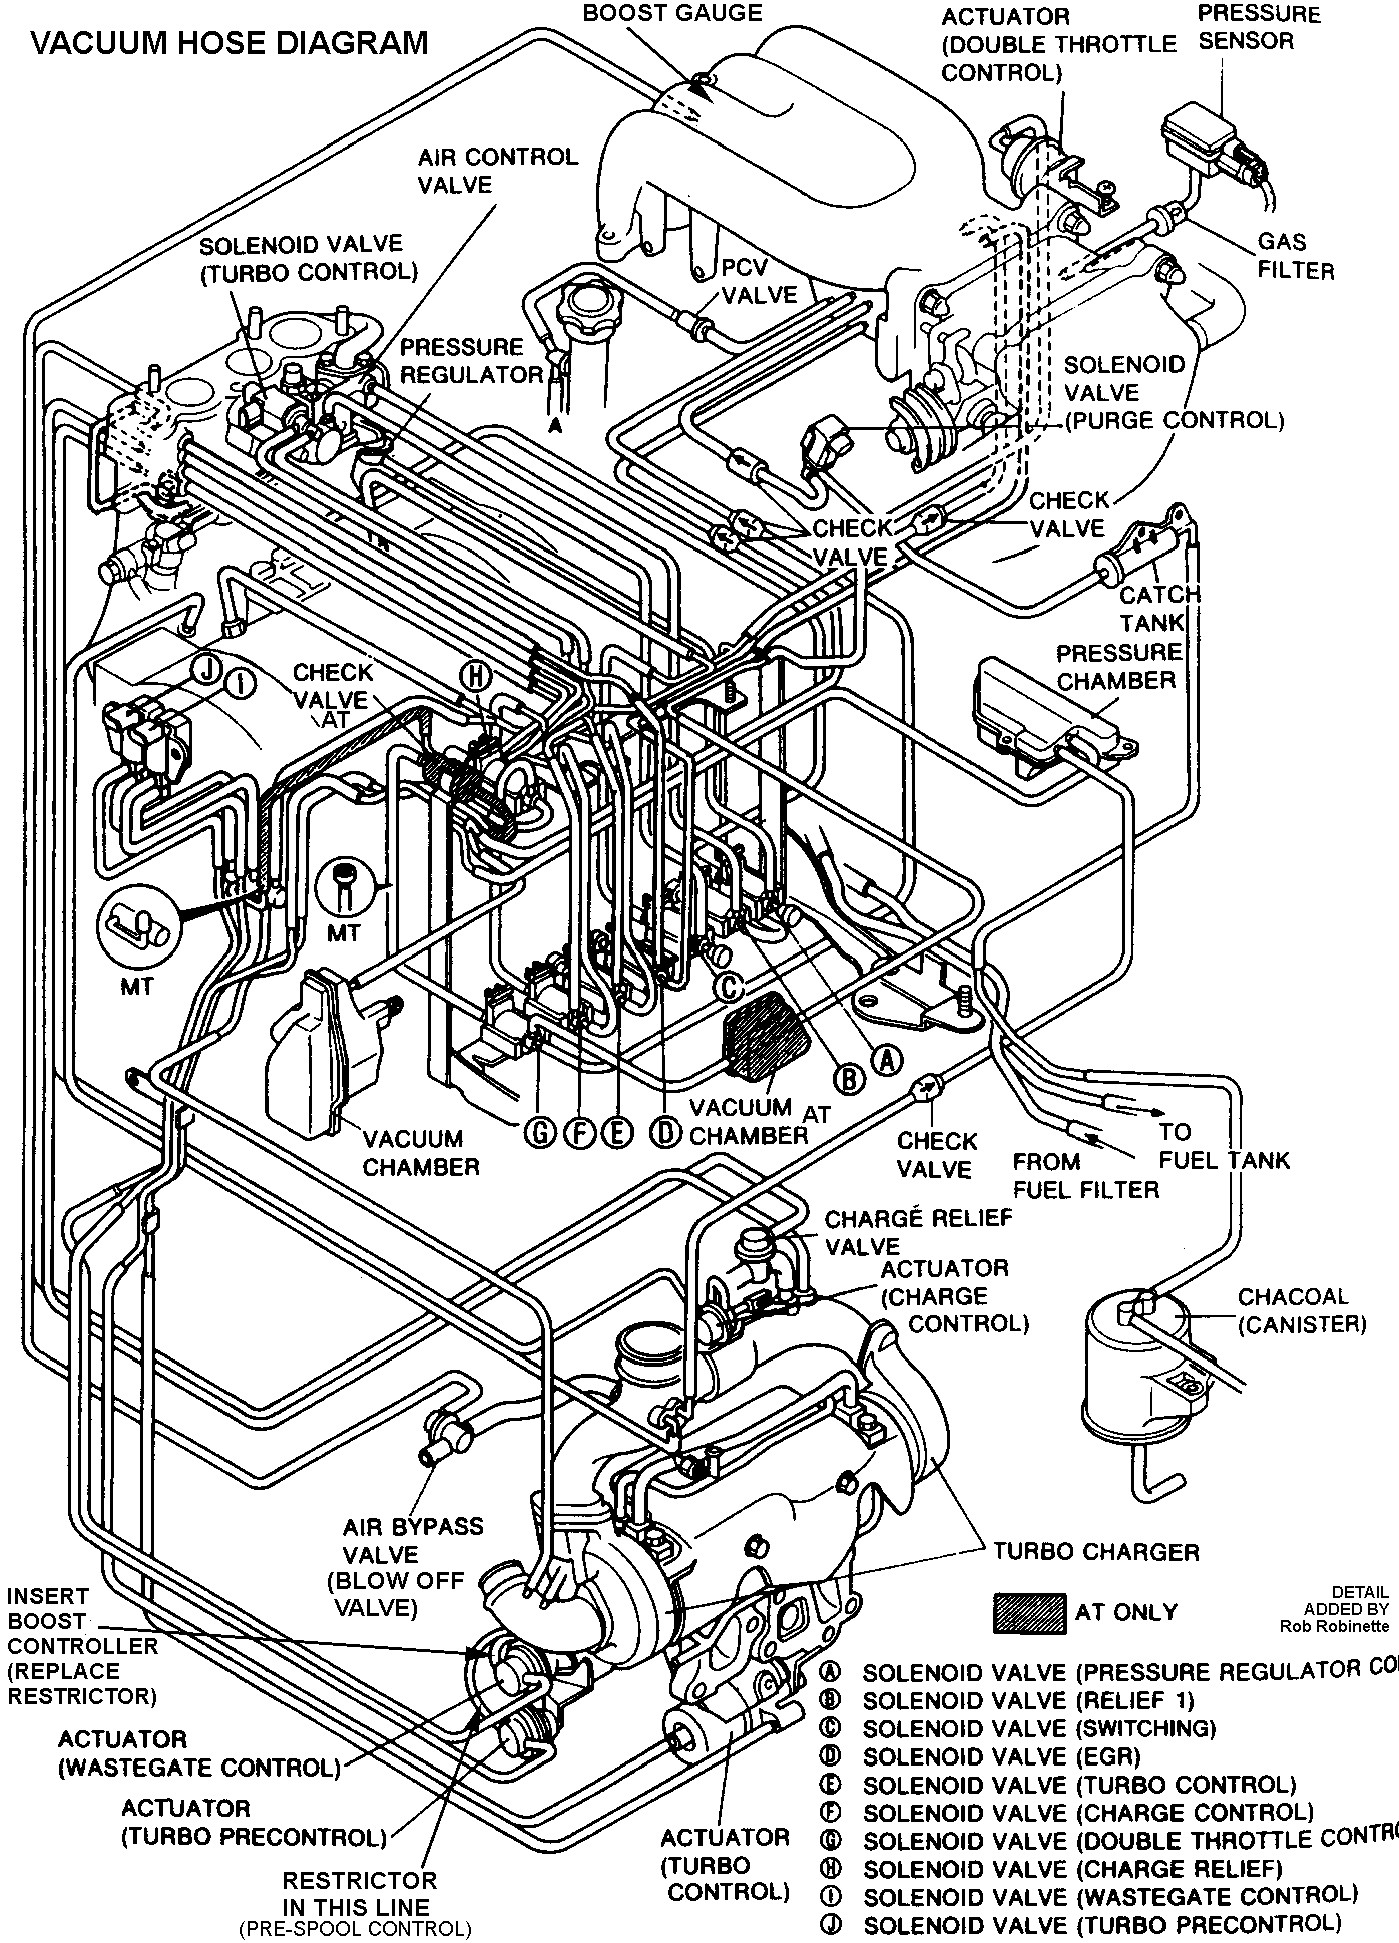 Mazda 3 Engine Parts Diagram 94 Miata 1 8 Engine Diagram Another Blog About Wiring Diagram • Of Mazda 3 Engine Parts Diagram